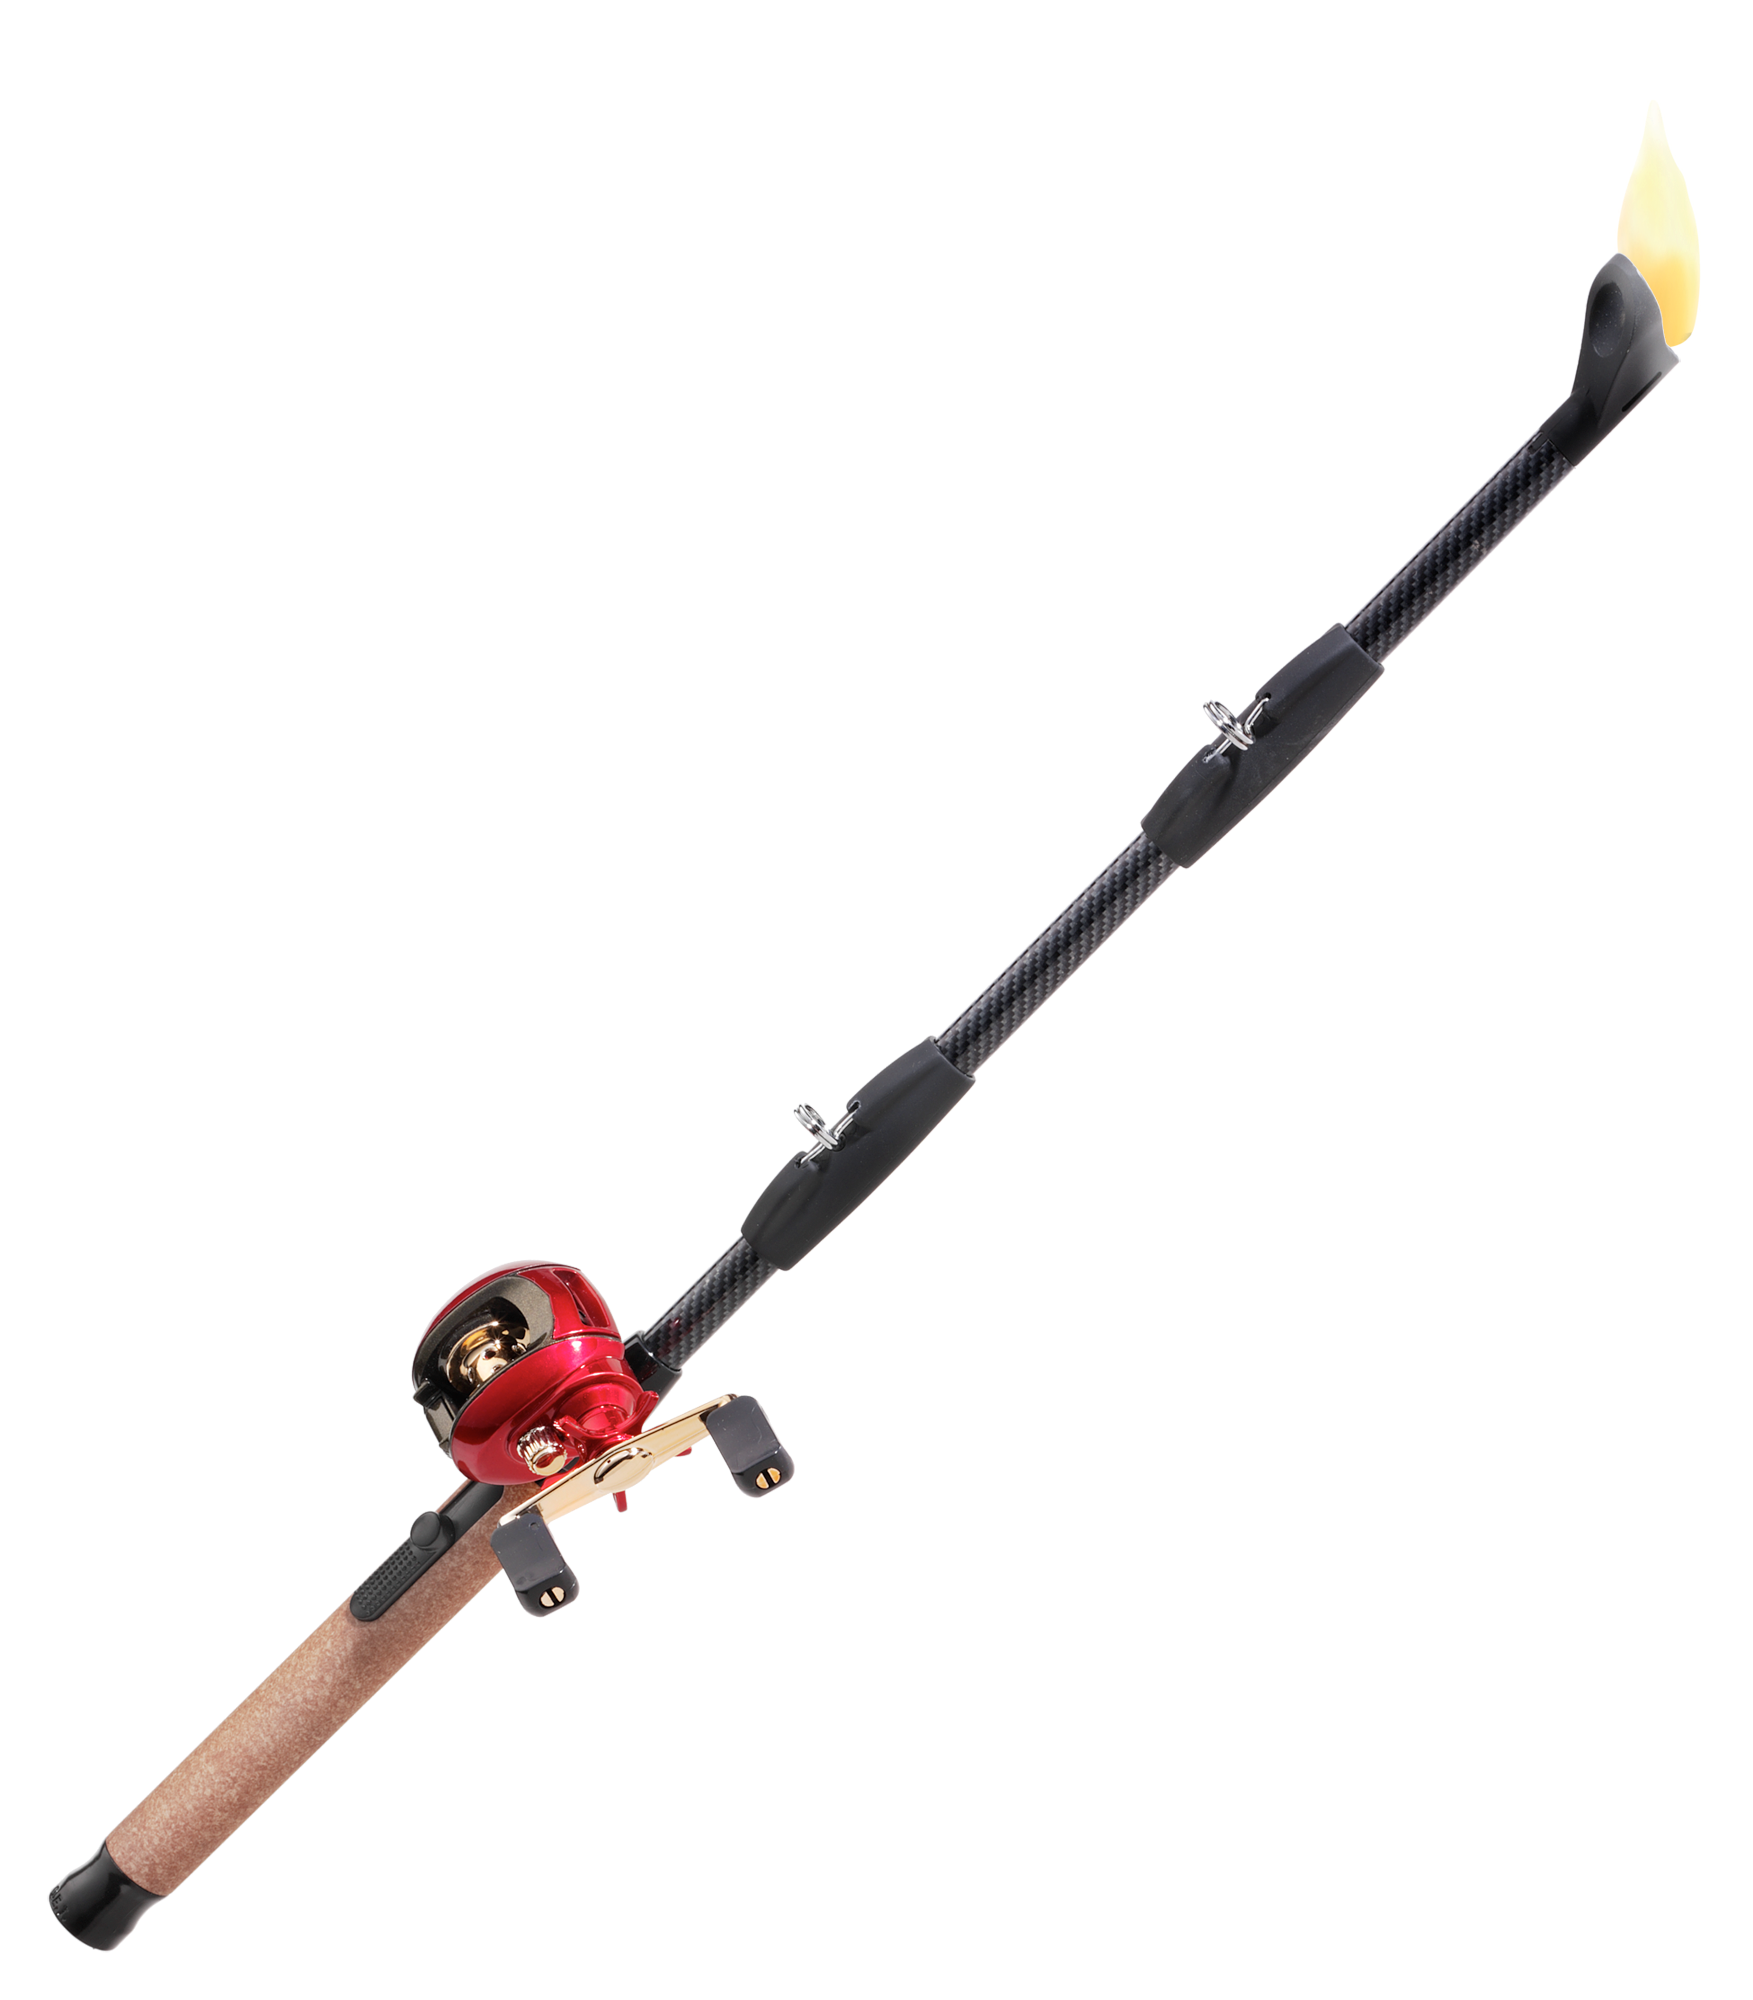 Baitcast Fishing Pole BBQ Lighter - Annies Hallmark and Gretchens Hallmark  $17.99